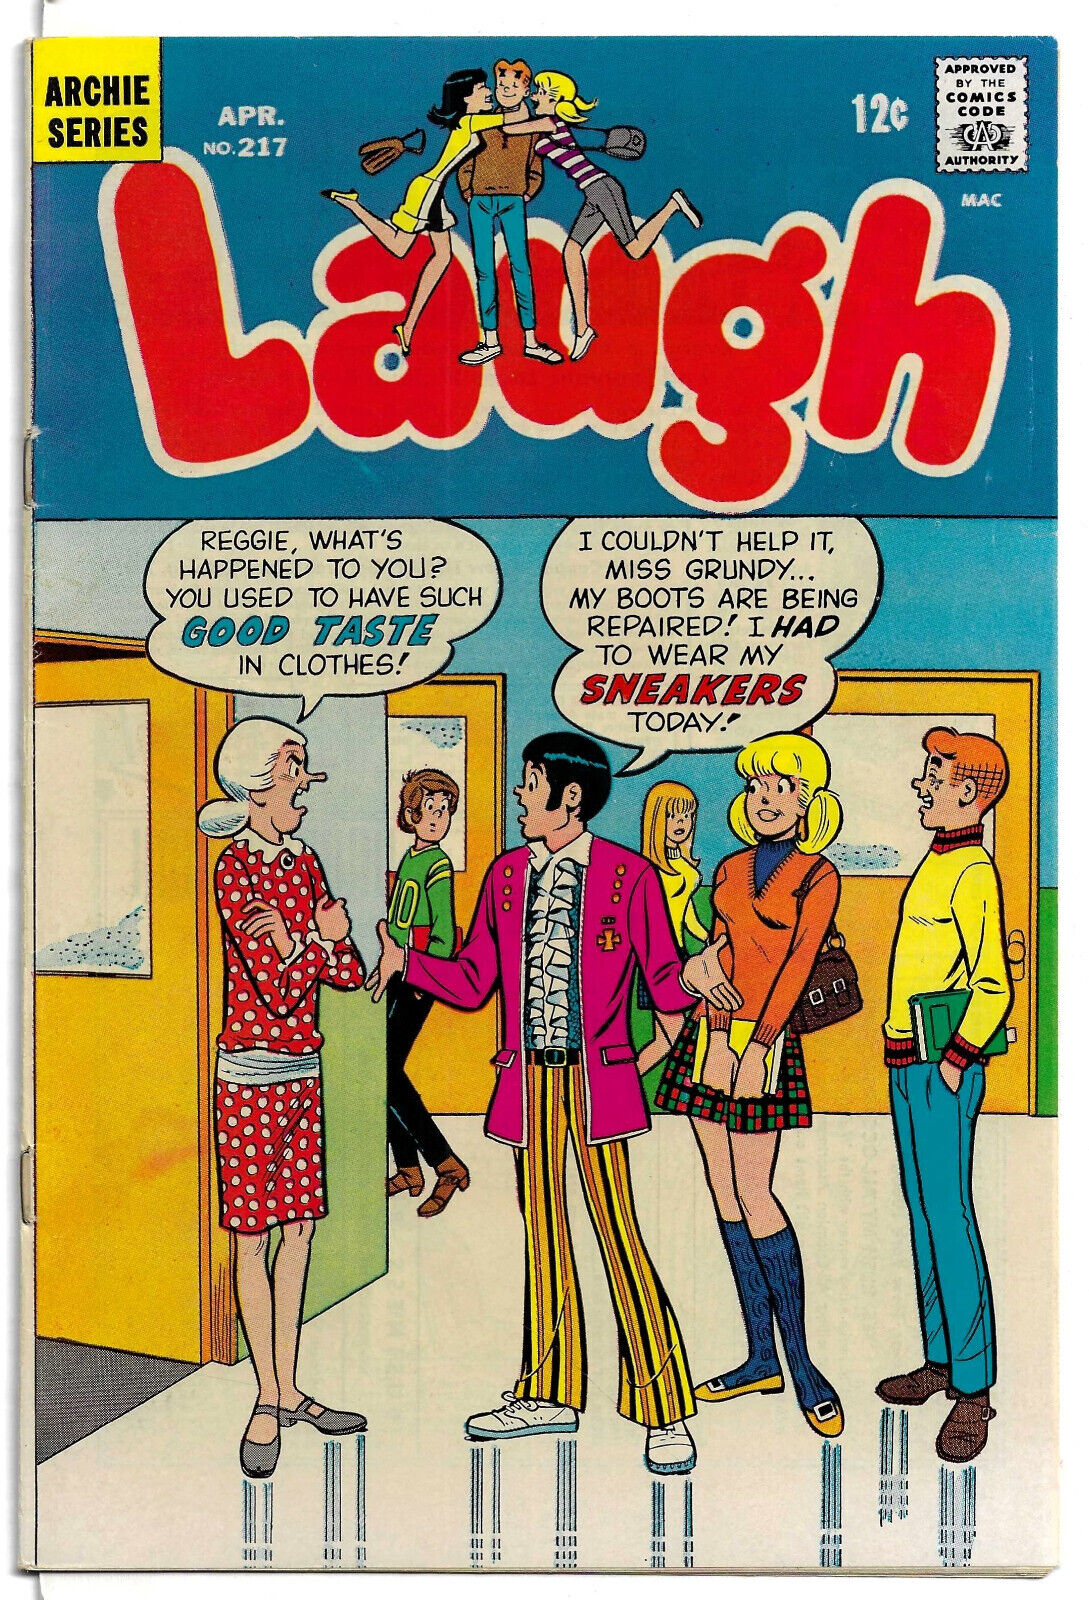 Laugh Comics #217 (Archie Series) 4/69, Archie, Betty, Veronica, Jughead   VG/FN